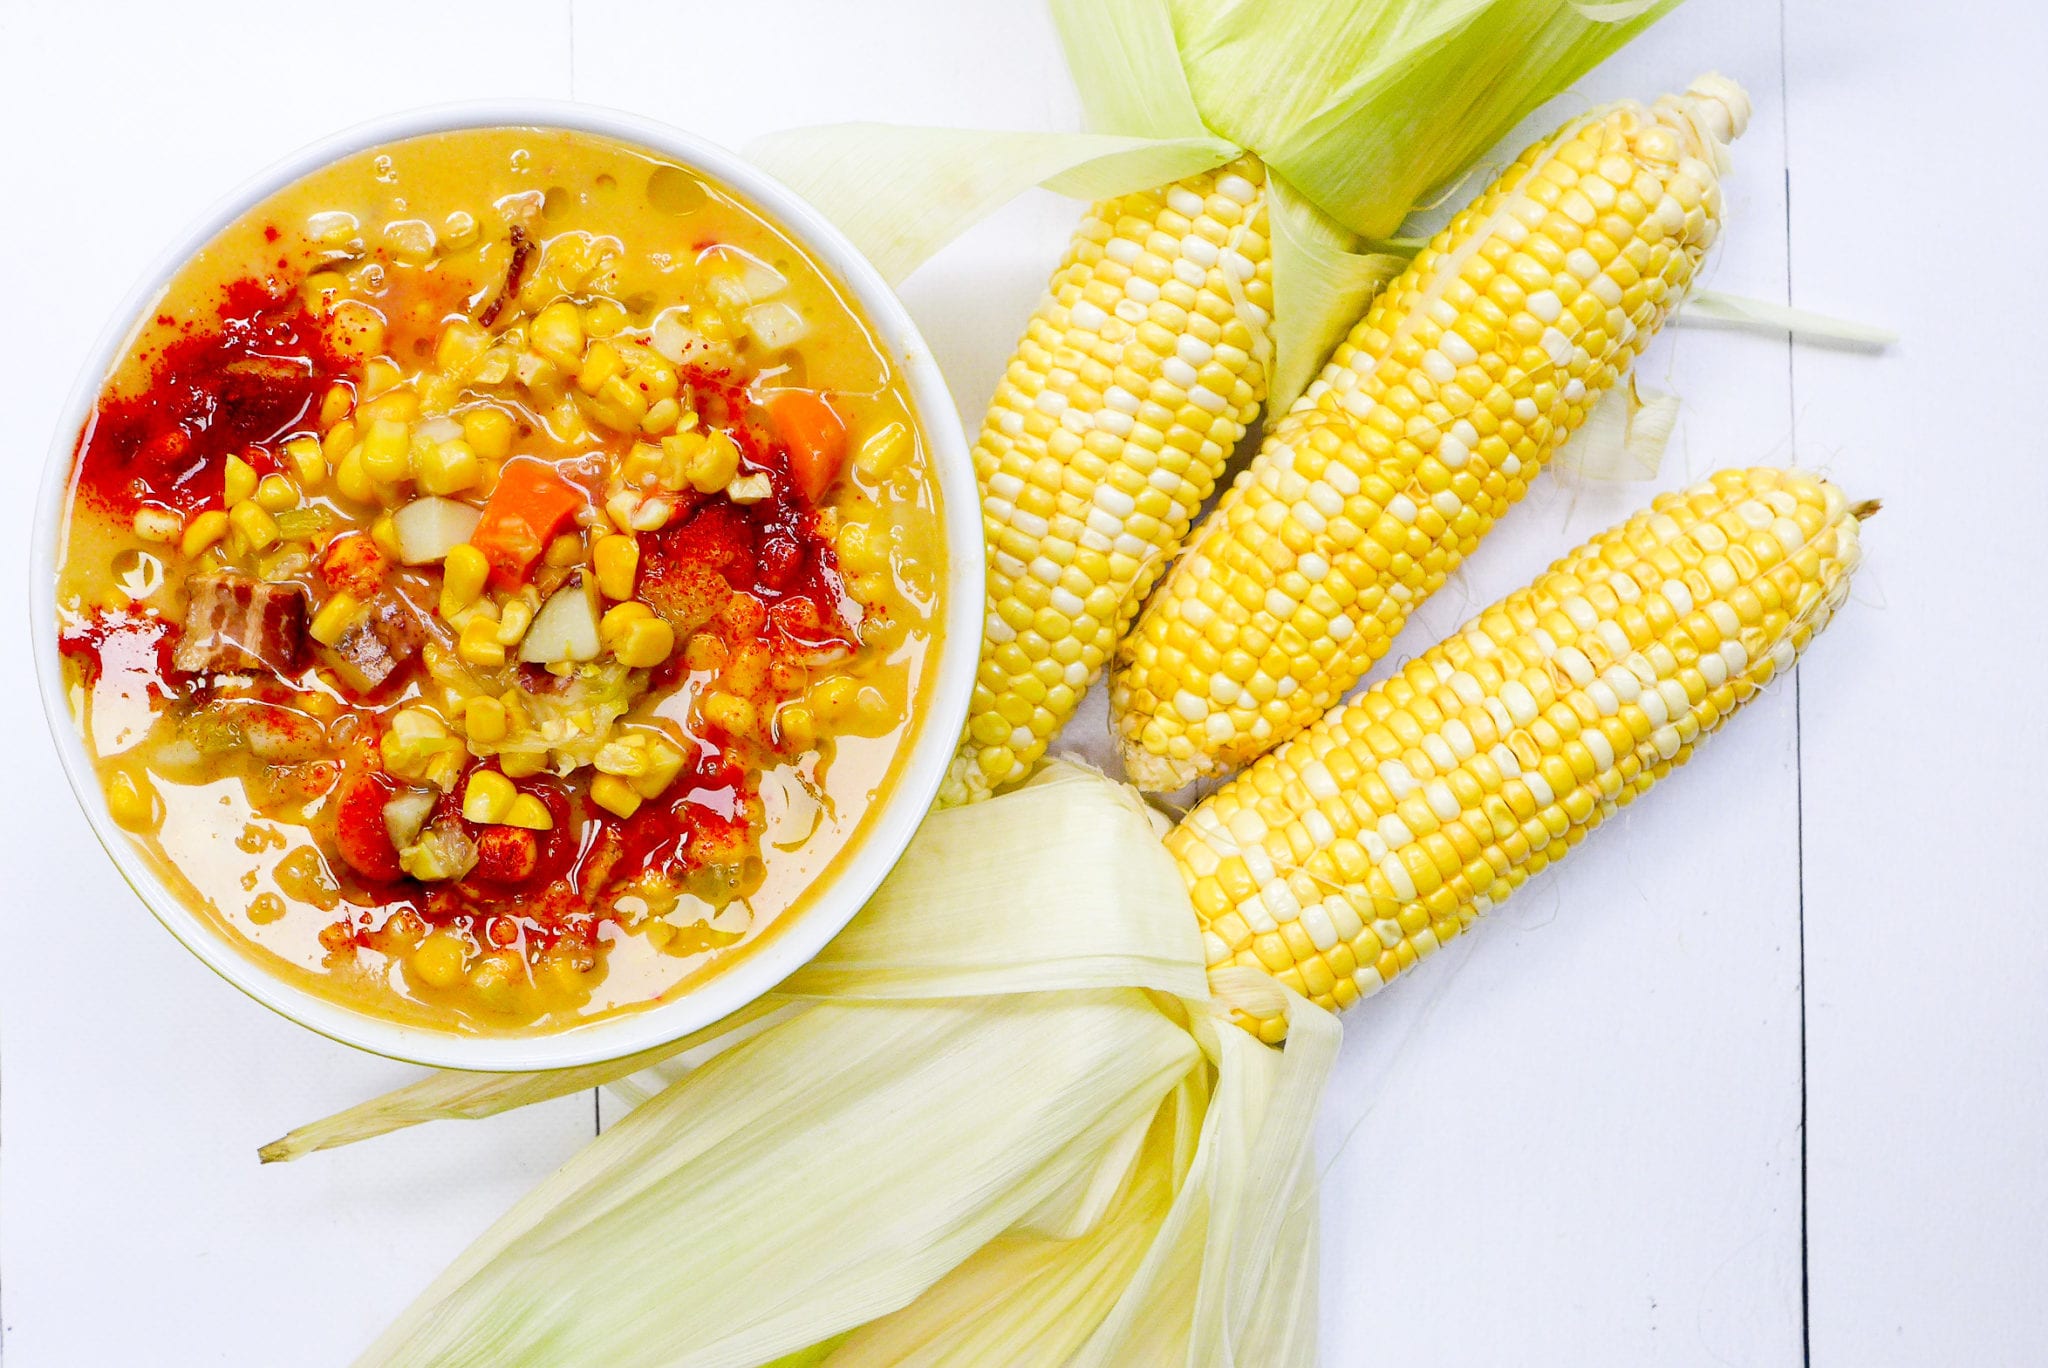 Food columnist Jennifer Eremeeva makes creamy corn chowder